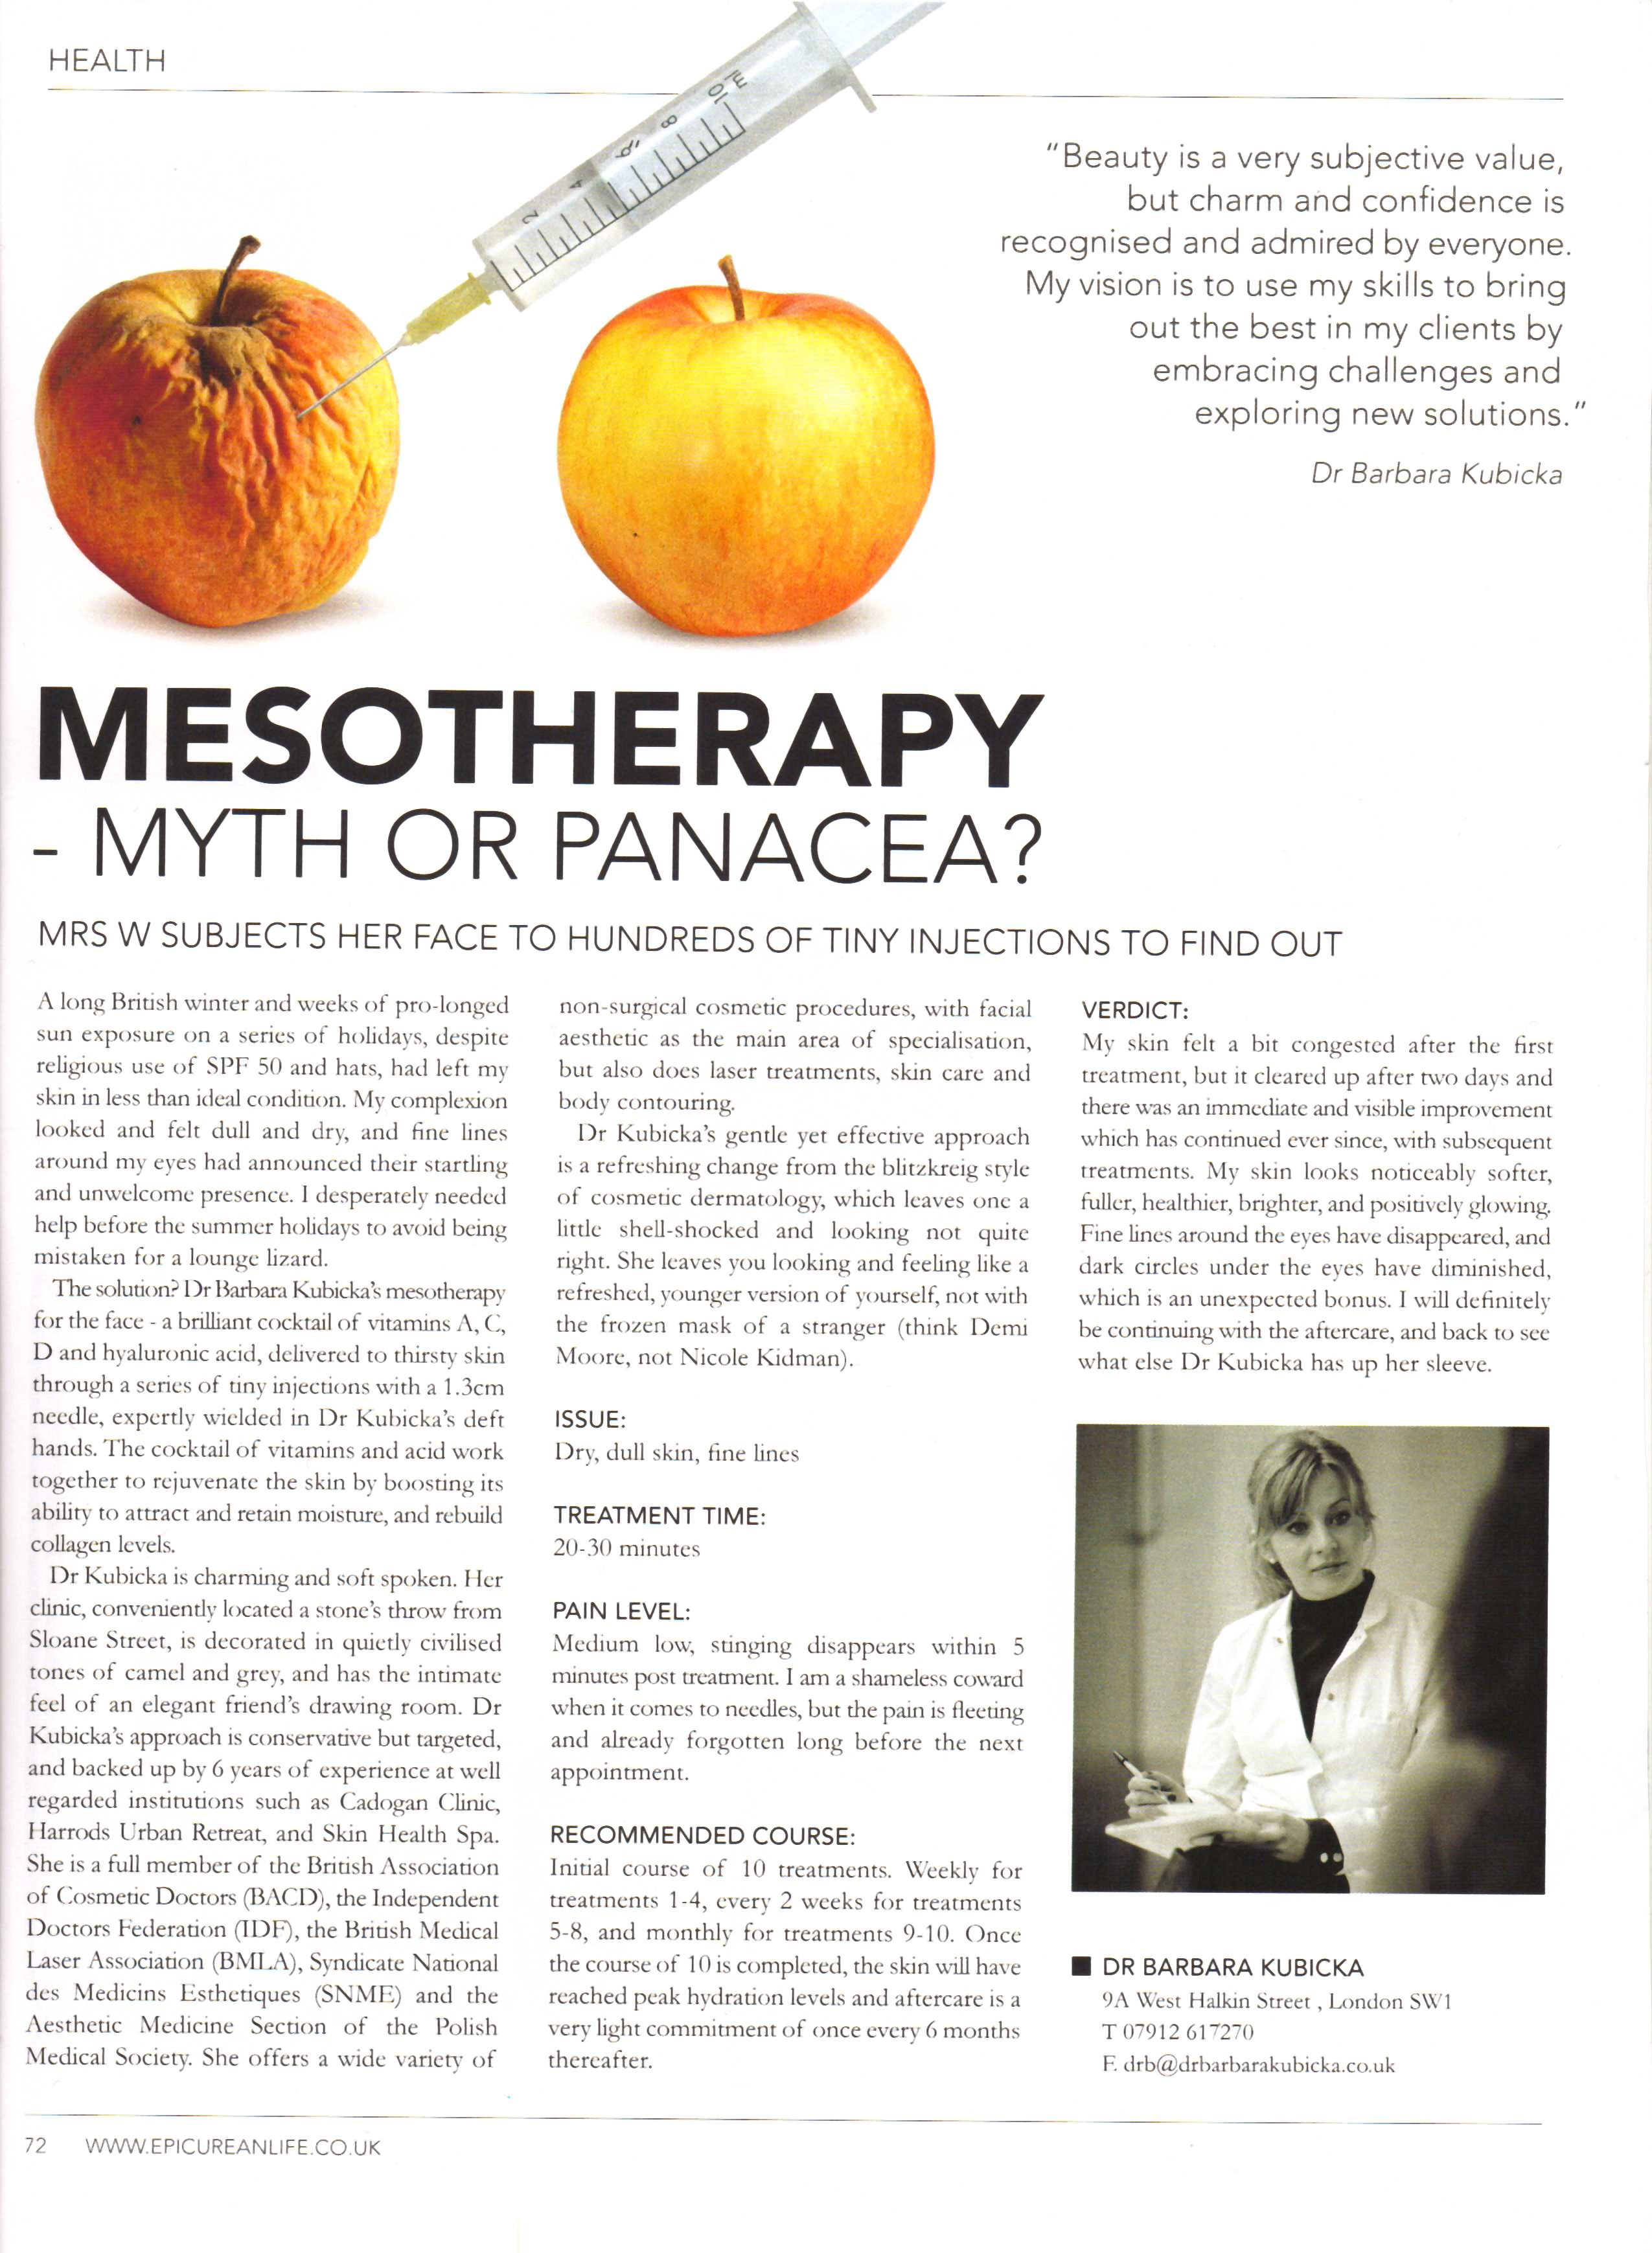 Epicurean Life Magazine: Mesotherapy, Myth or Panacea